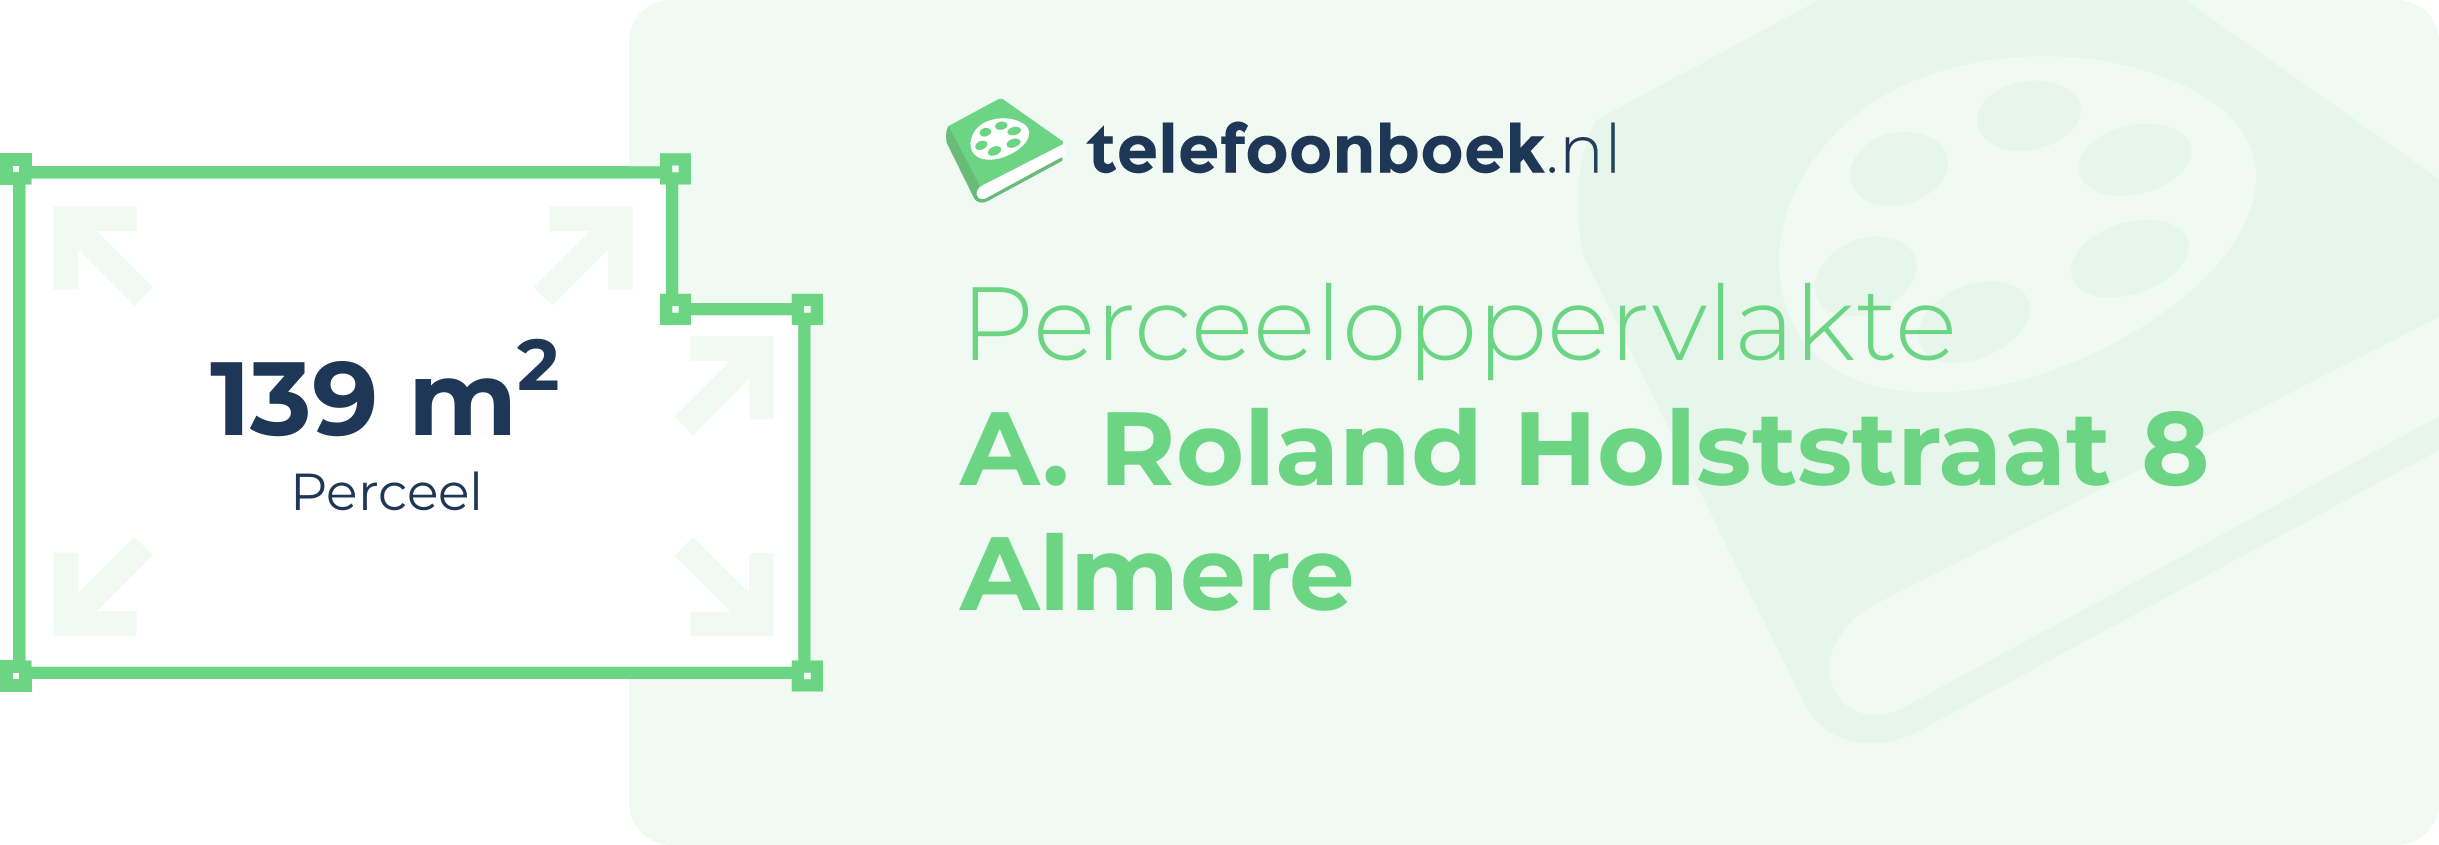 Perceeloppervlakte A. Roland Holststraat 8 Almere